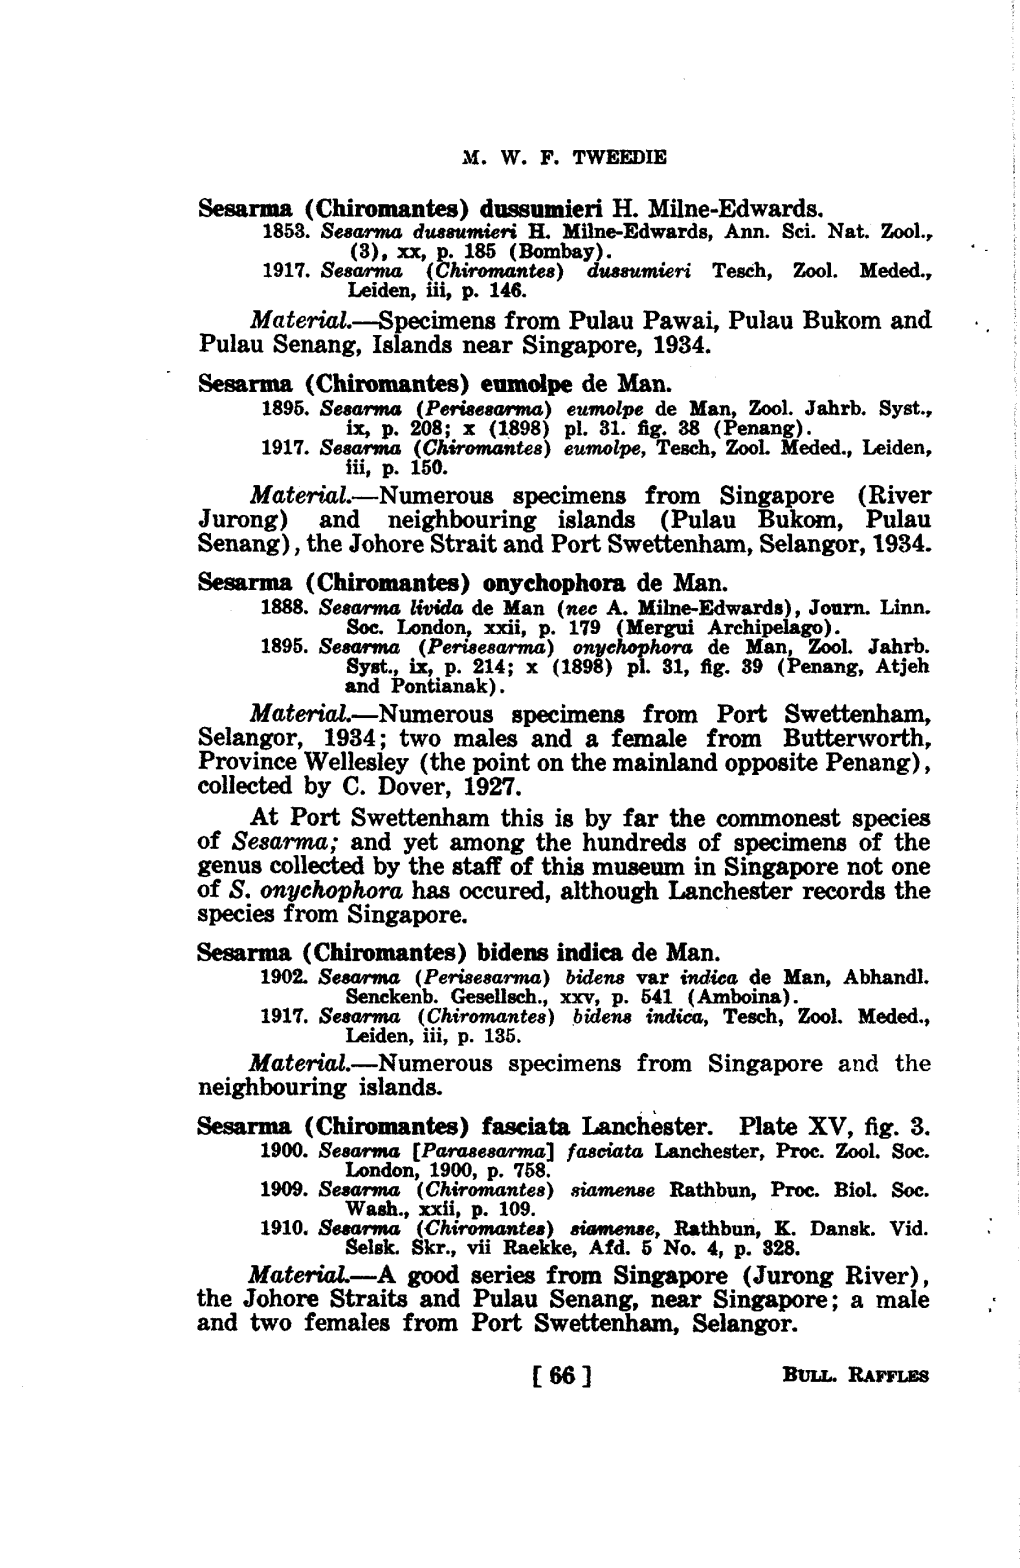 Sesarma (Chiromantes) Dussumieri H. Milne-Edwards. Material.—Specimens from Pulau Pawai, Pulau Bukom and Pulau Senang, Islands